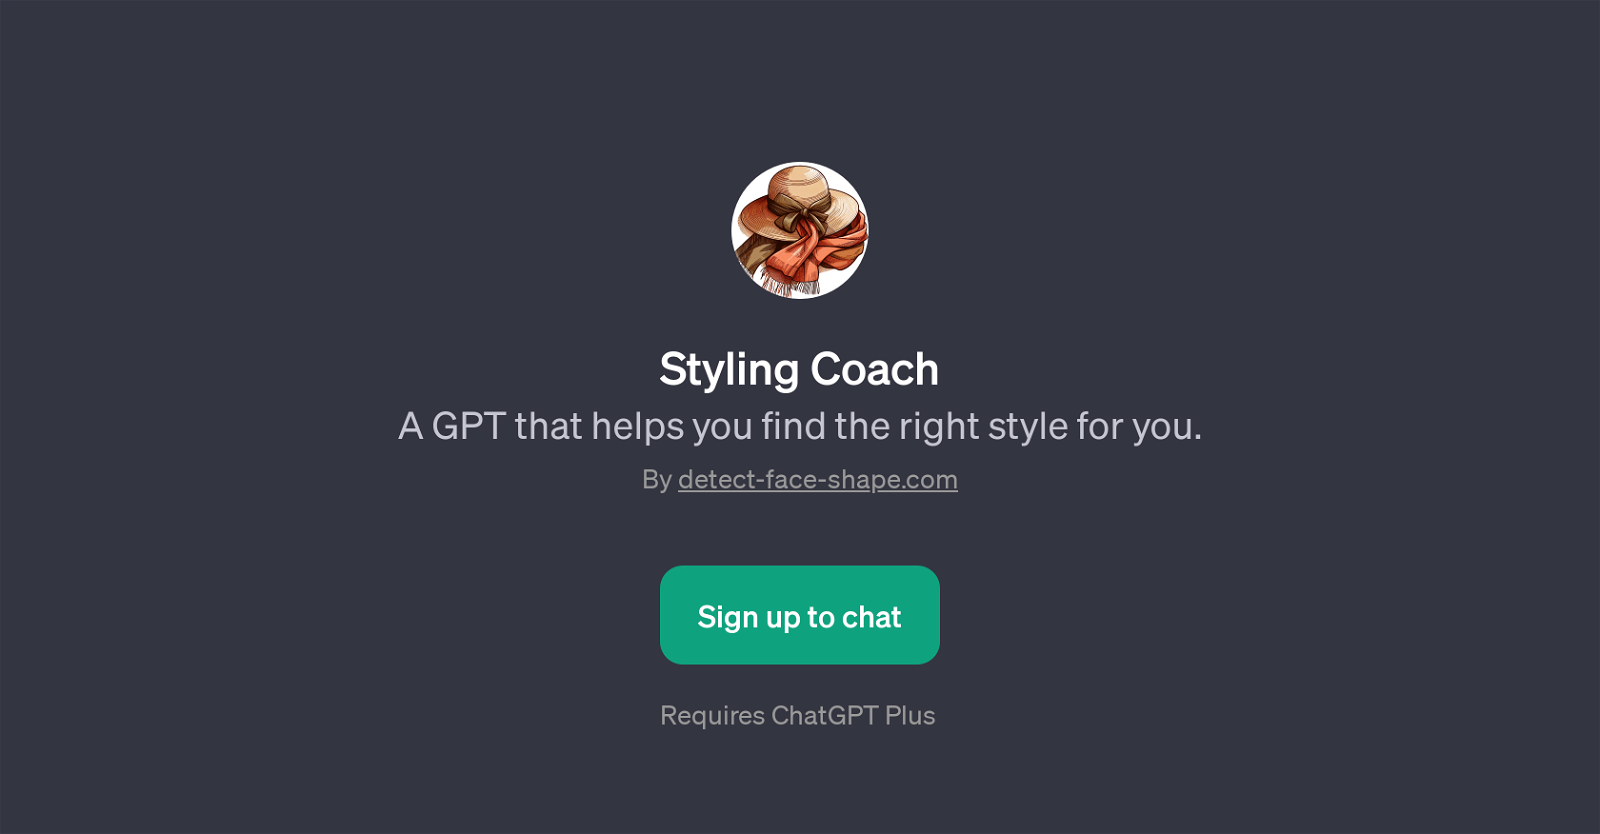 Styling Coach website